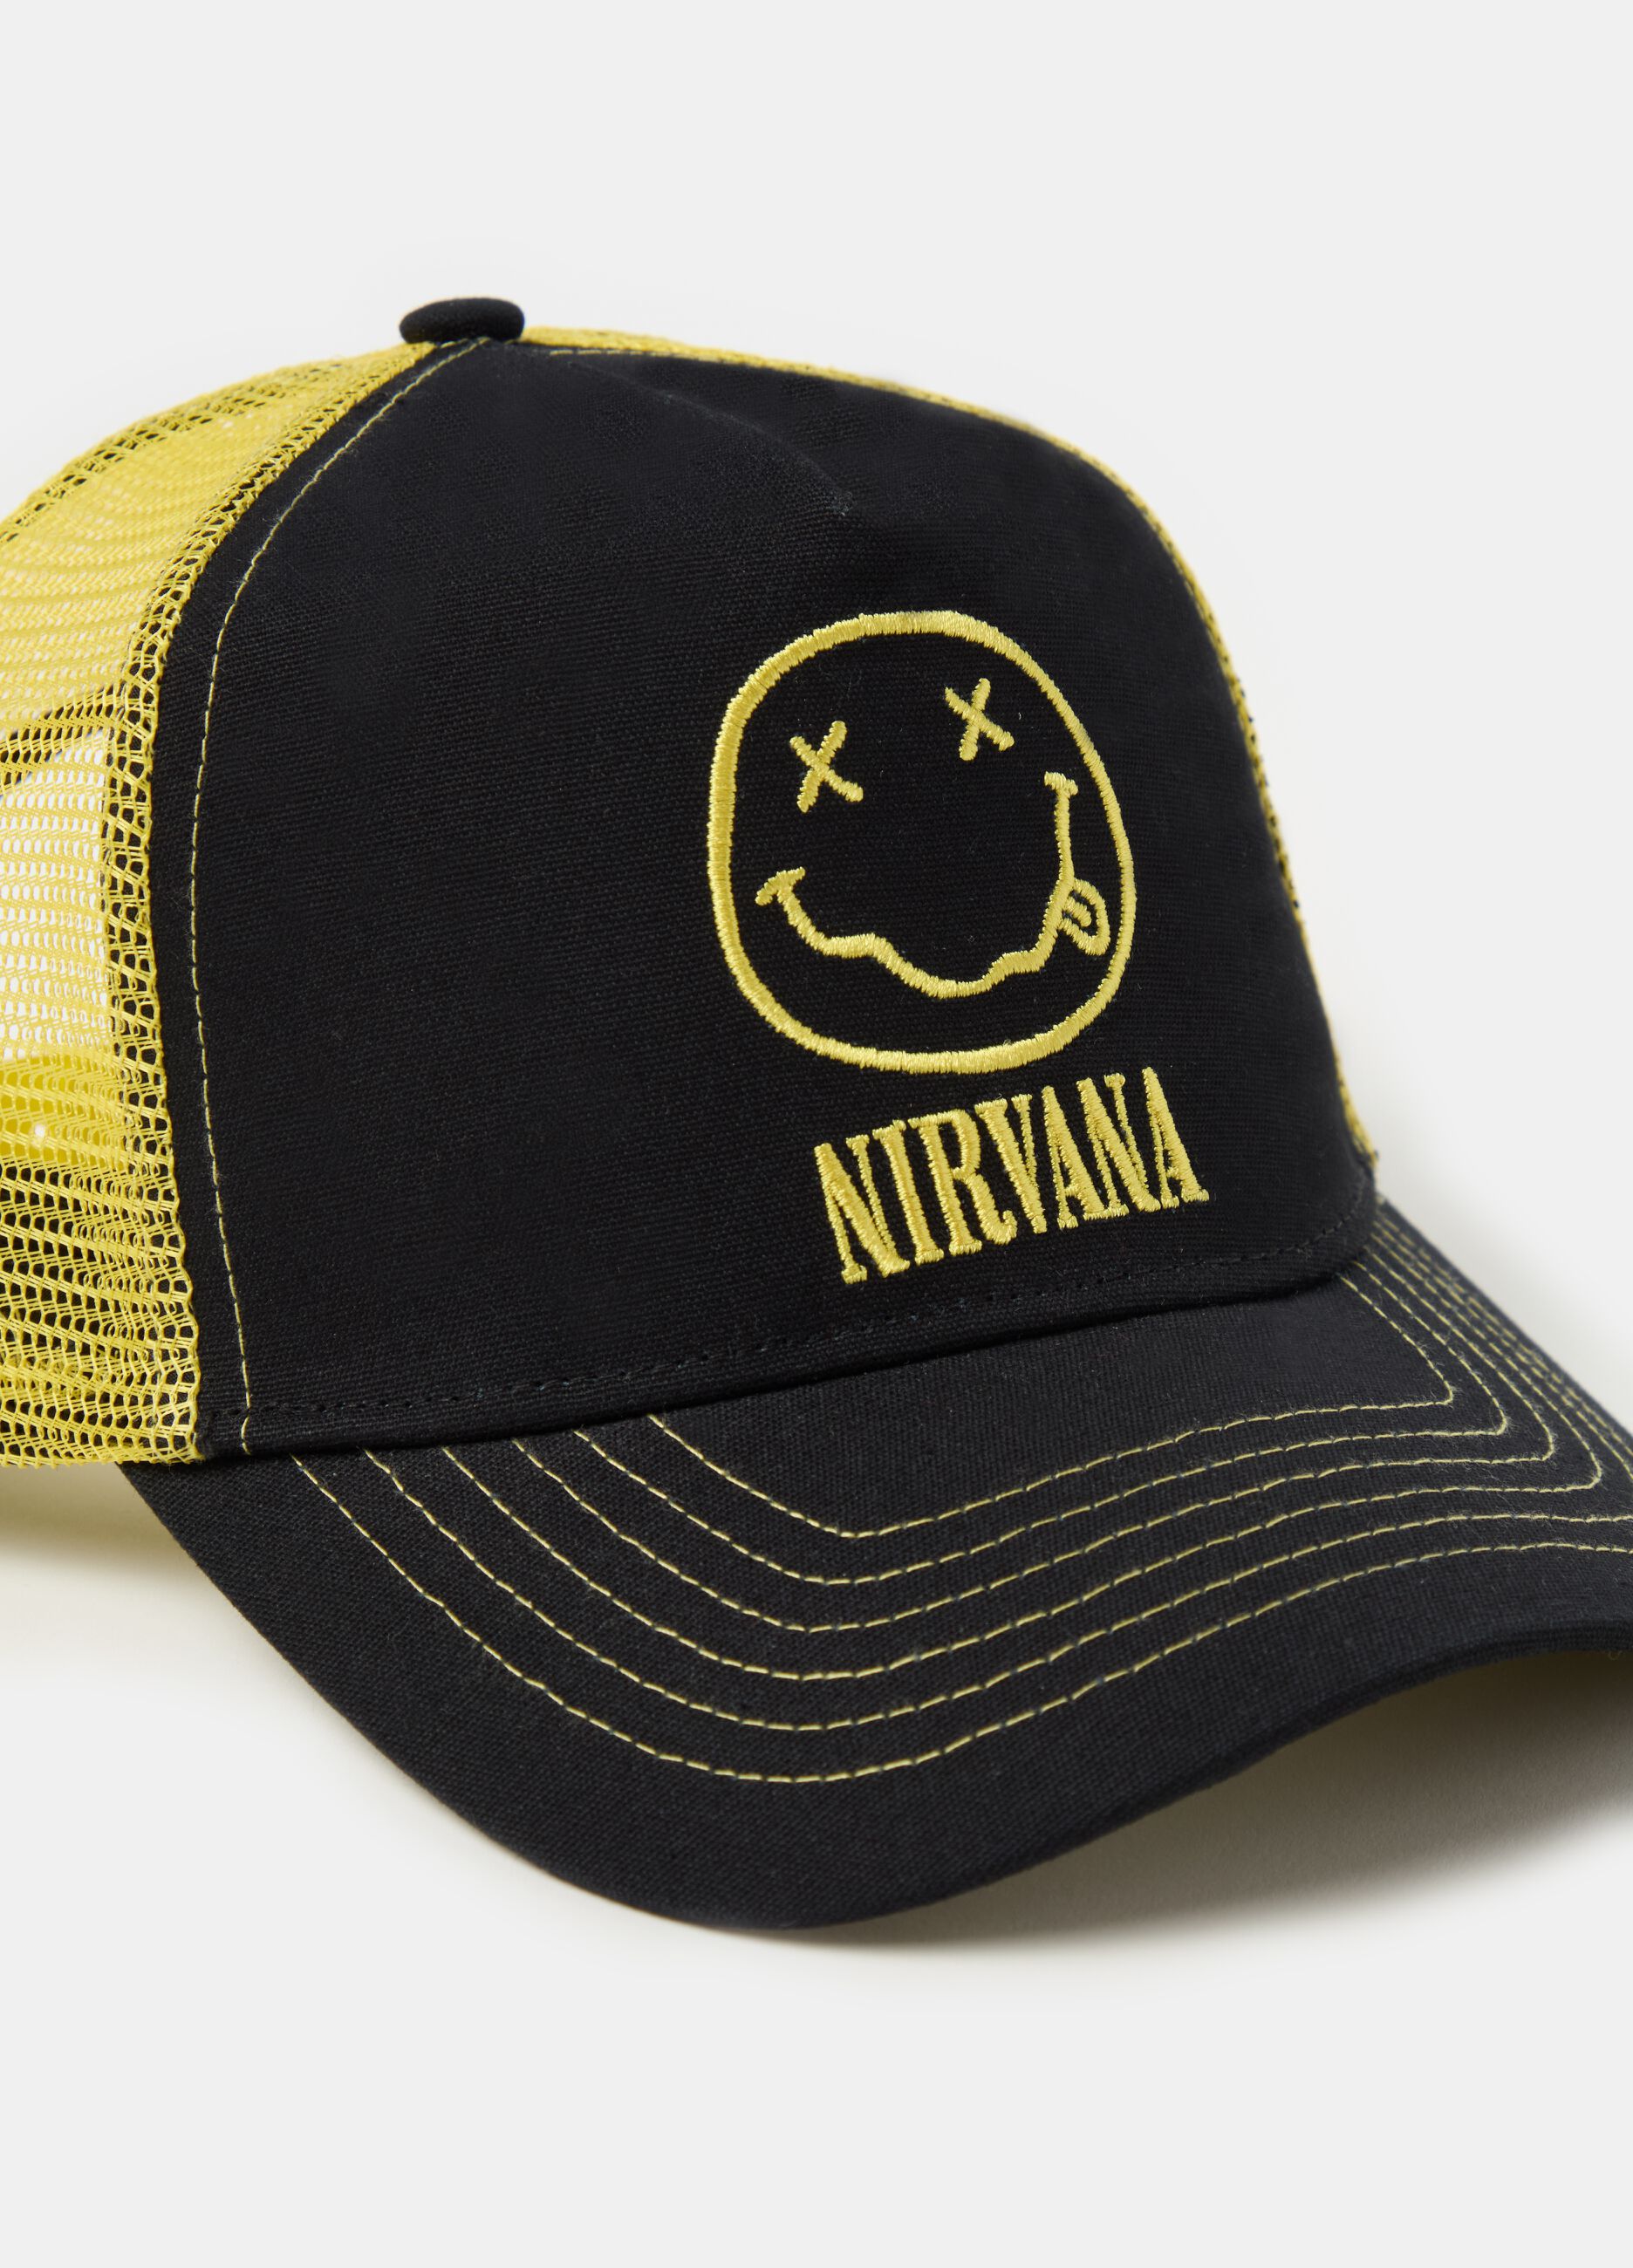 Baseball cap with Nirvana embroidery